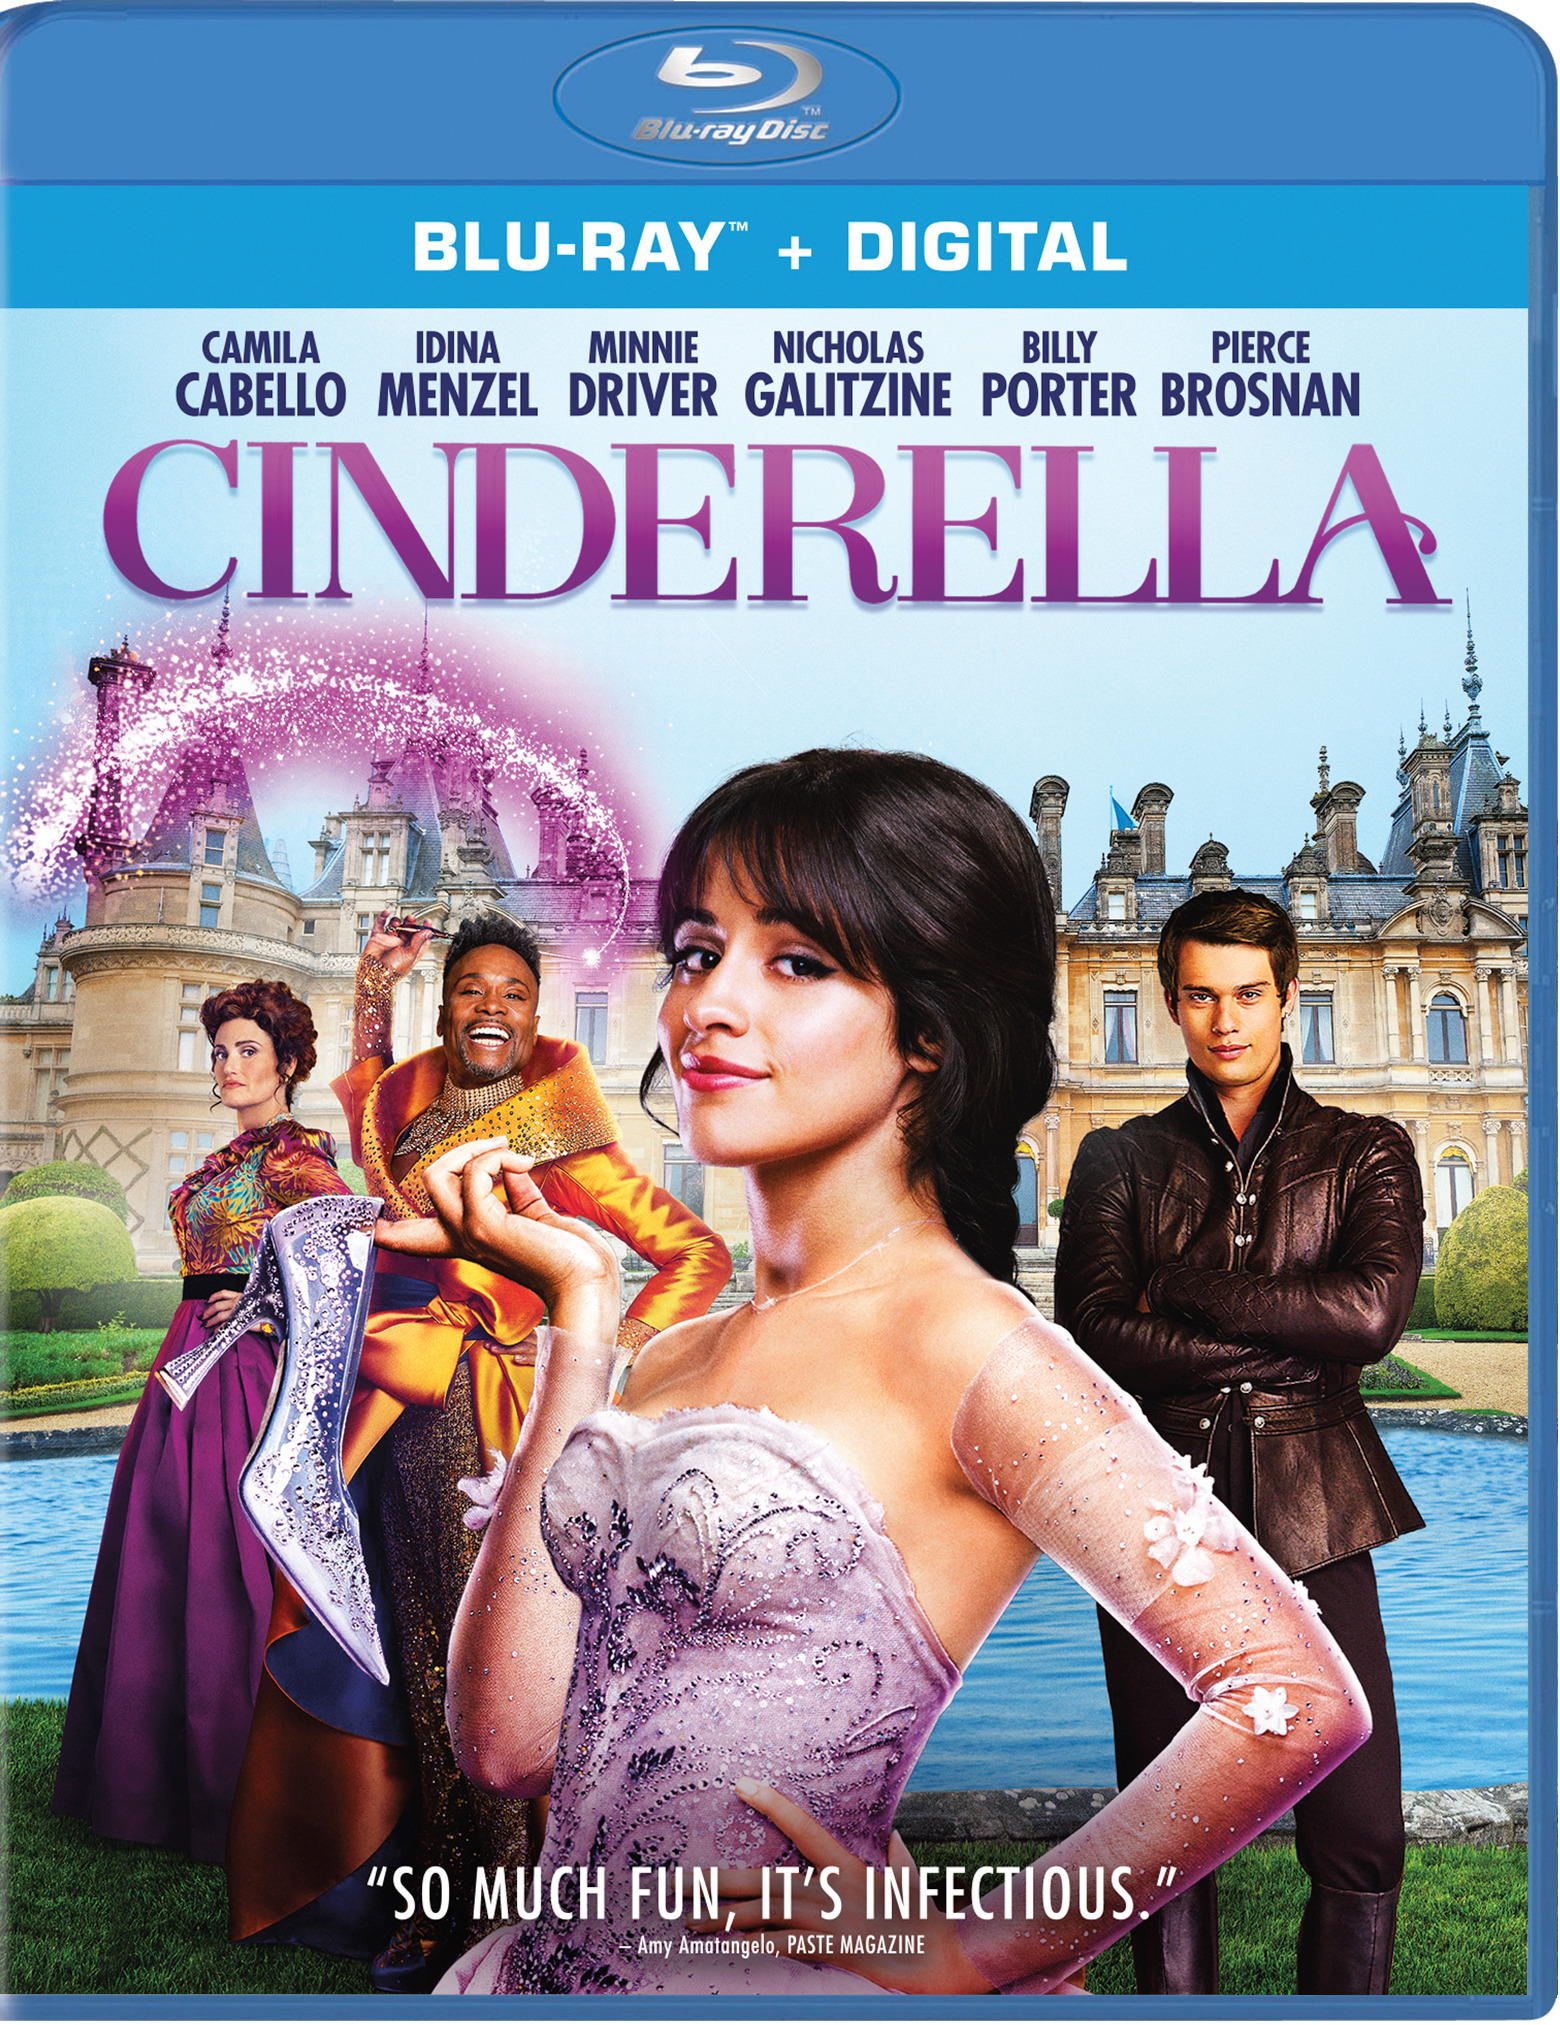 Cinderella Movie 2021 Poster Wallpapers